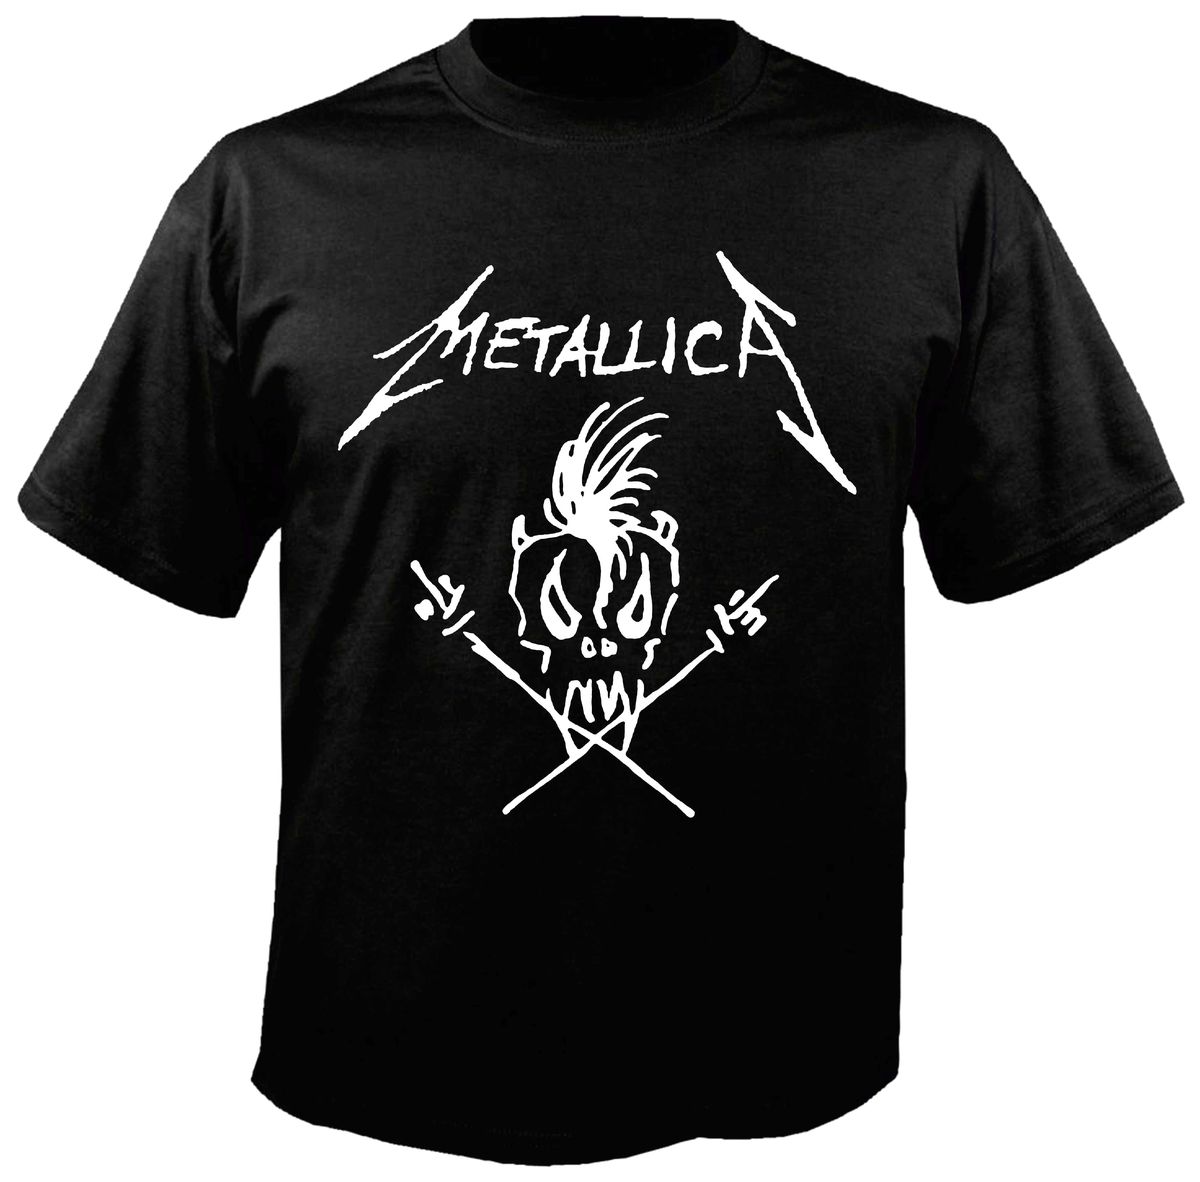 Metallica Band TShirt Metal & Rock Tshirts and Accessories